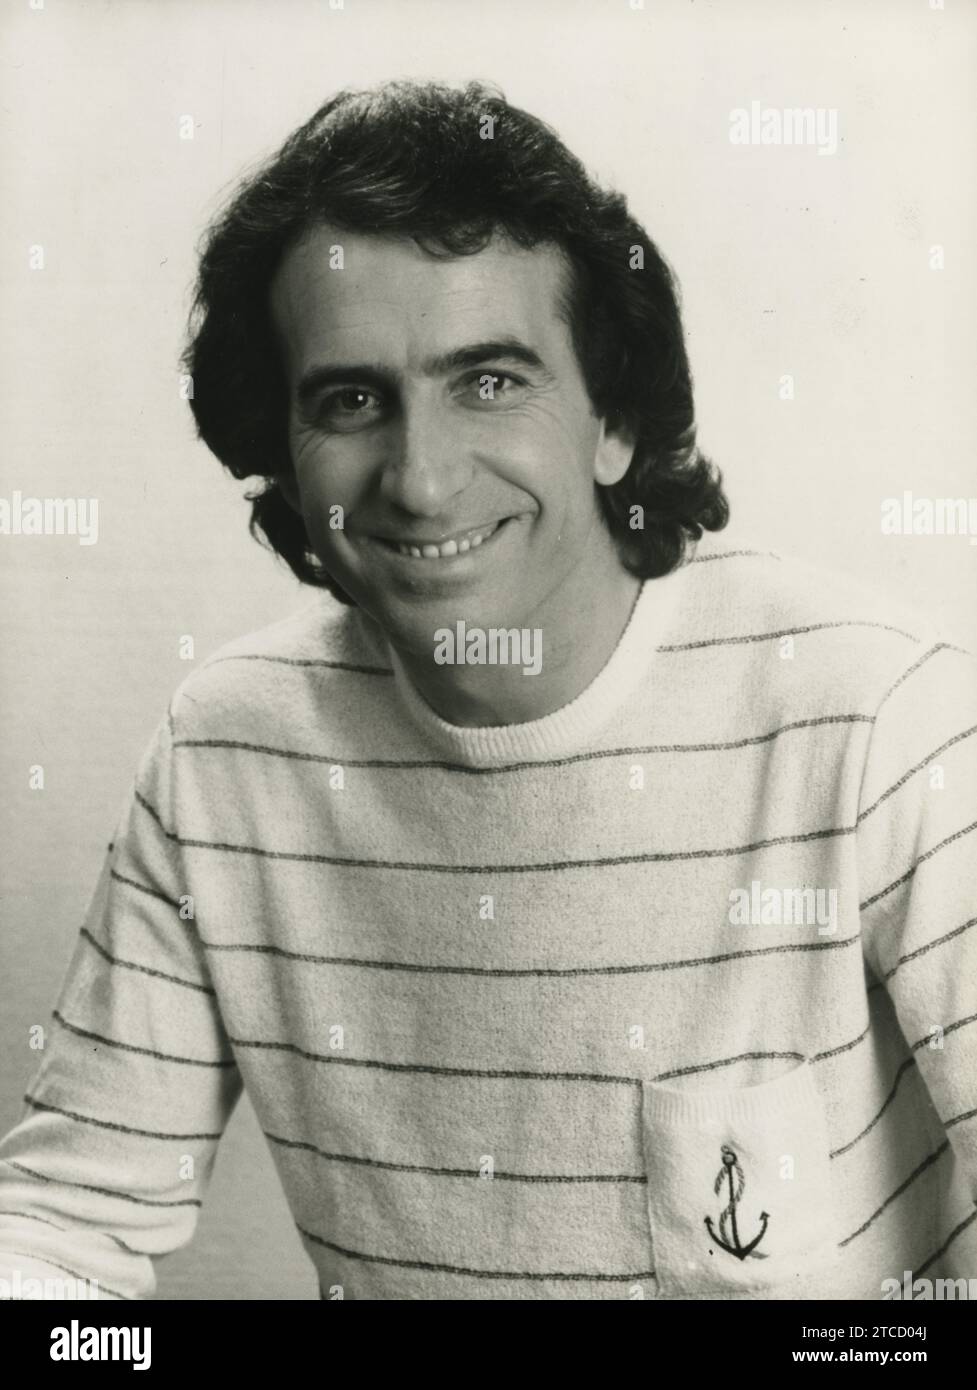 1975 (CA.). Portrait of the singer José Luis Perales. Credit: Album / Archivo ABC Stock Photo